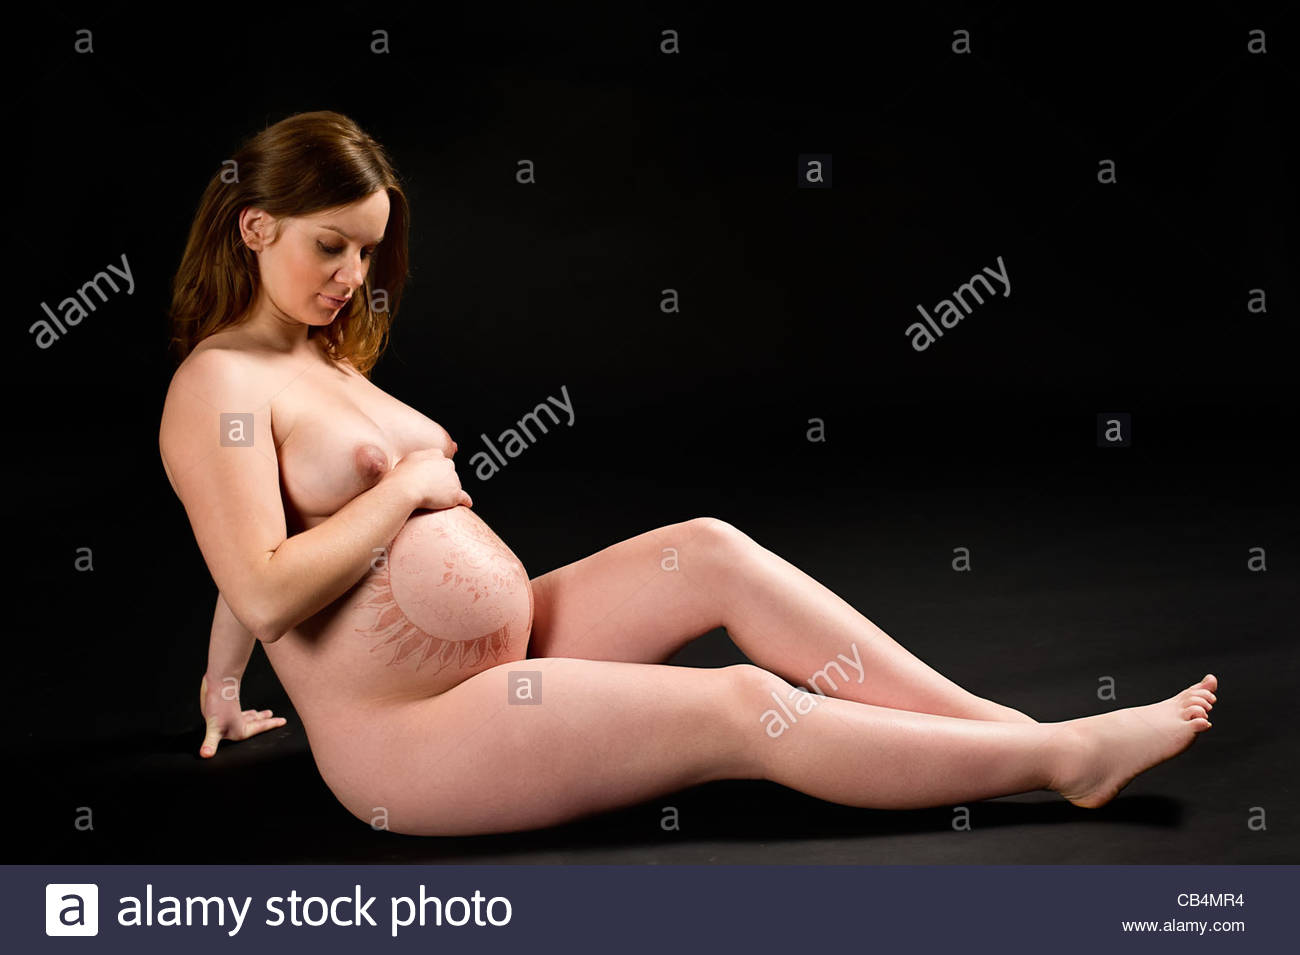 Women Pregnant Porn 10